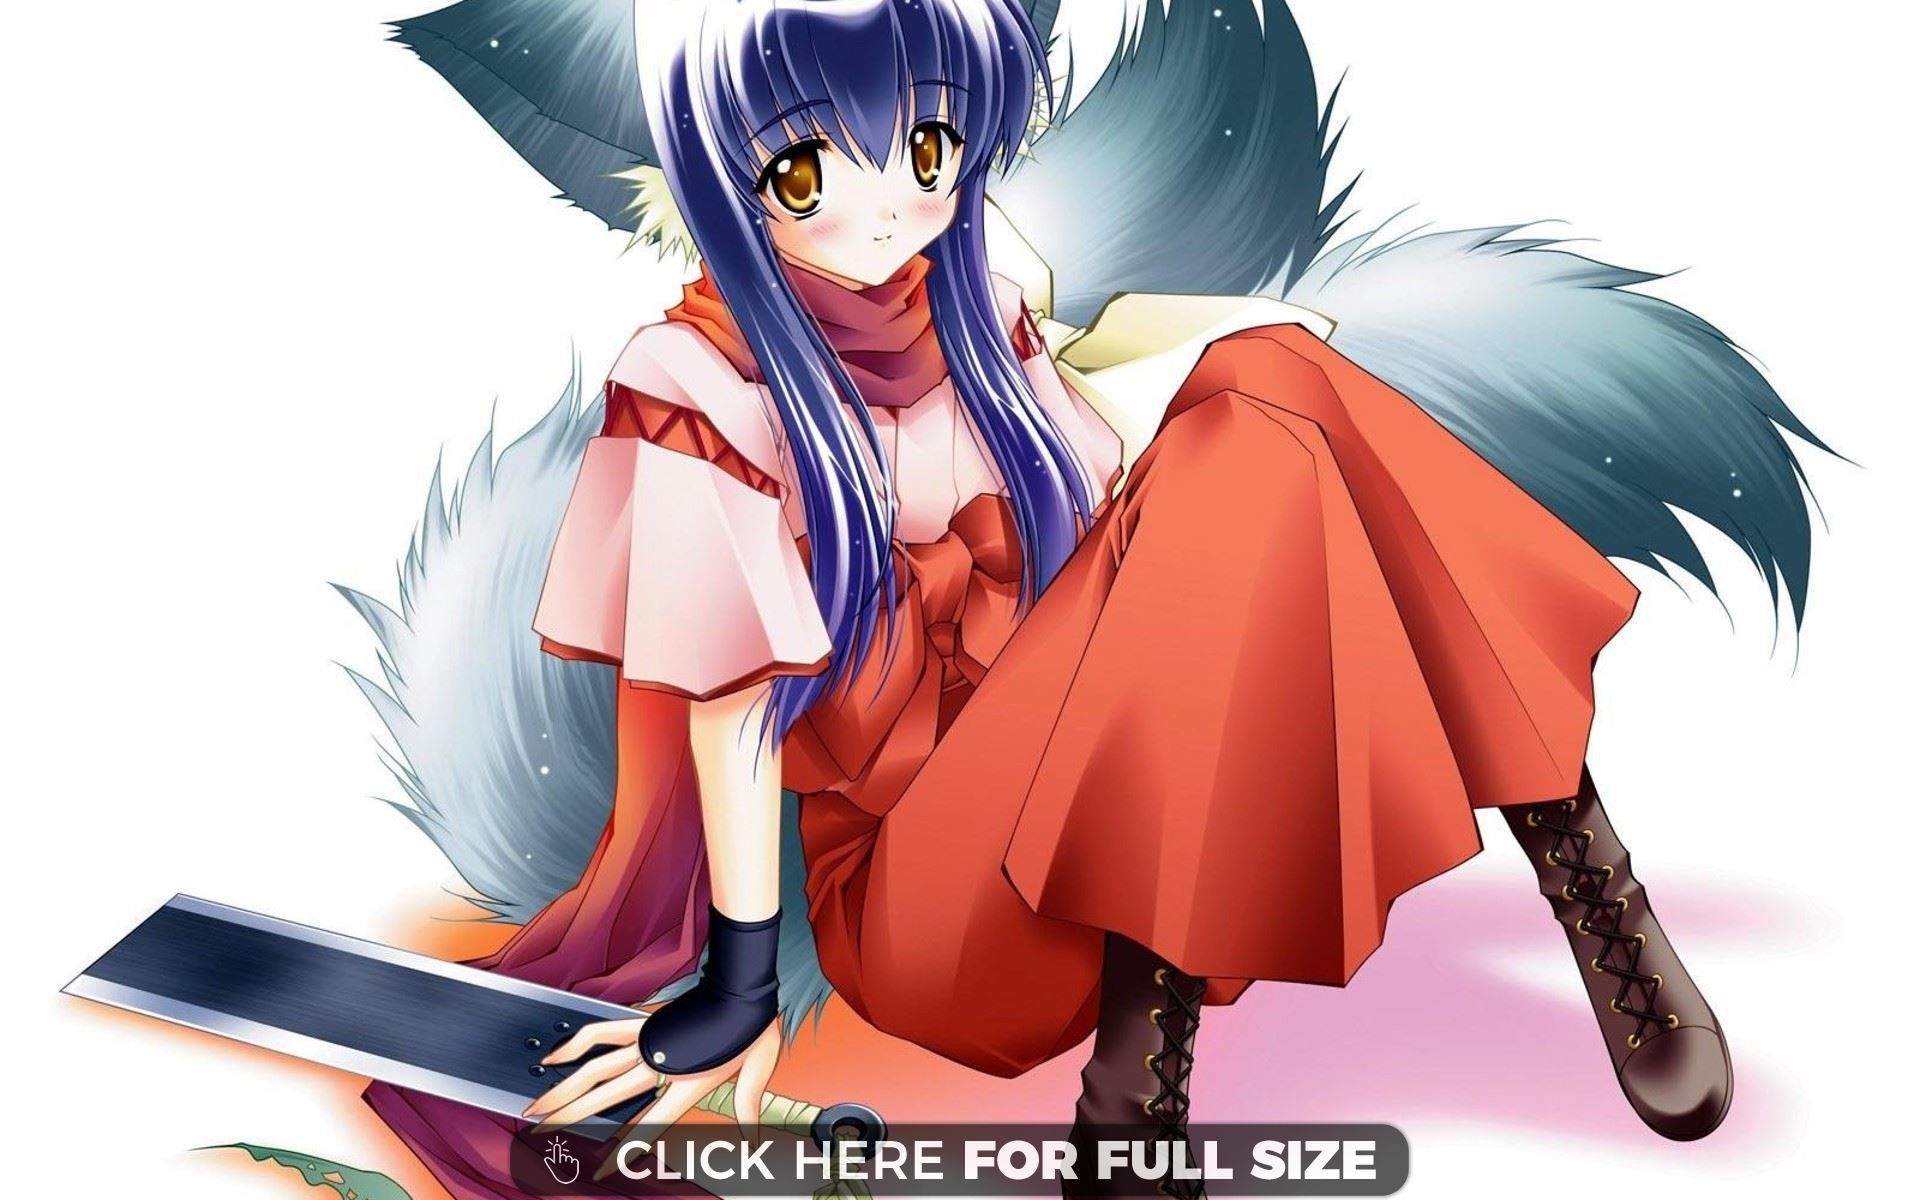 Wolf Anime Girl Wallpapers